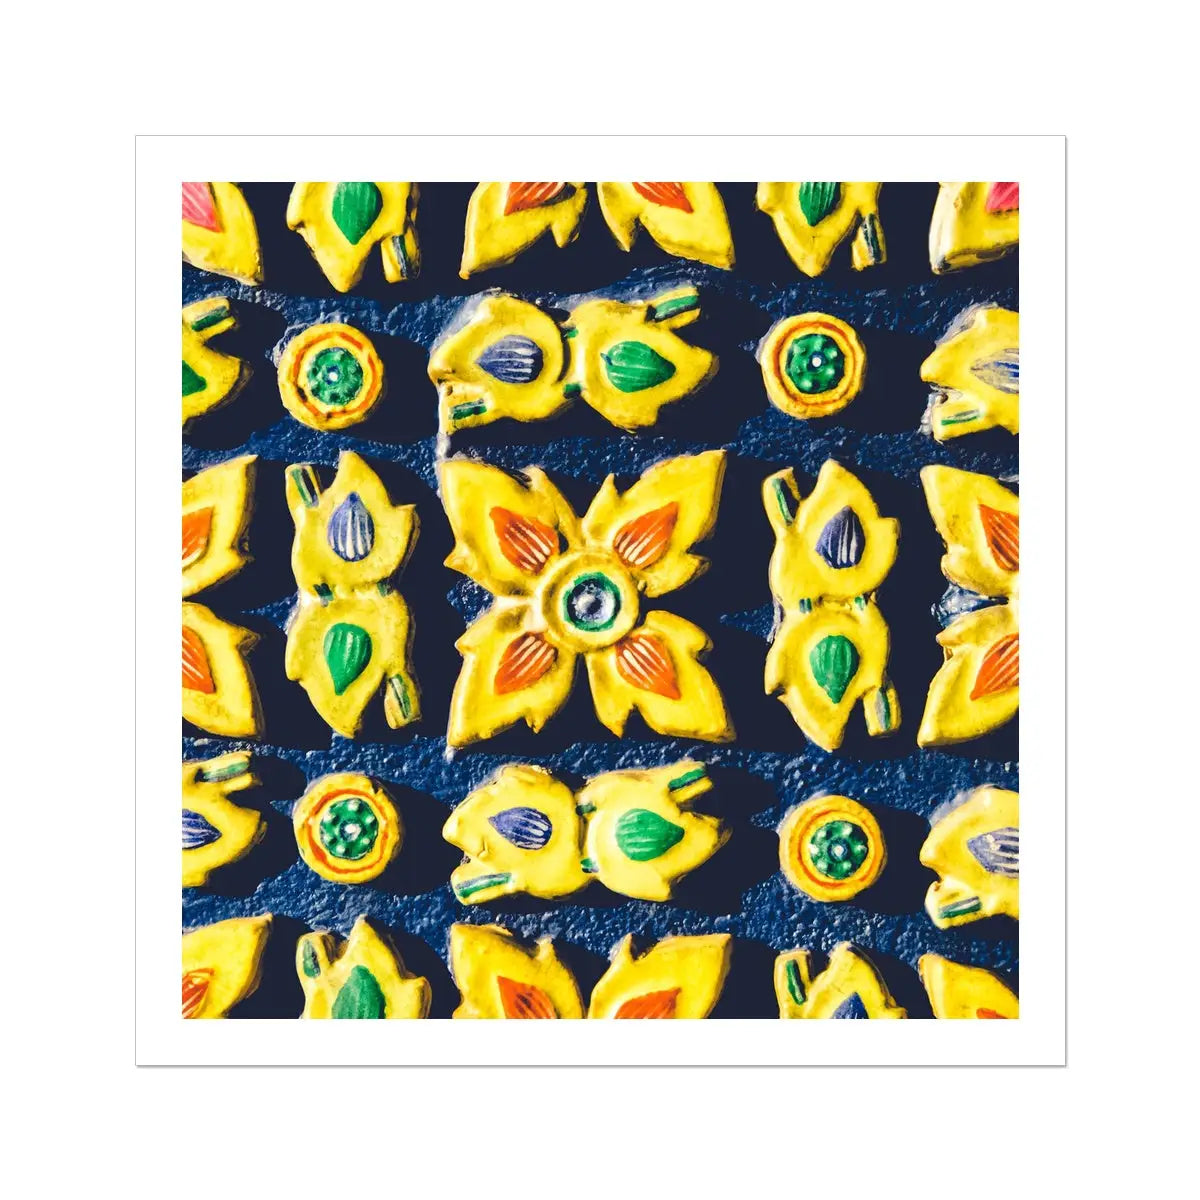 Kosala - Traditional Thailand Mosaic Art Print - 30’x30’ - Posters Prints & Visual Artwork - Aesthetic Art